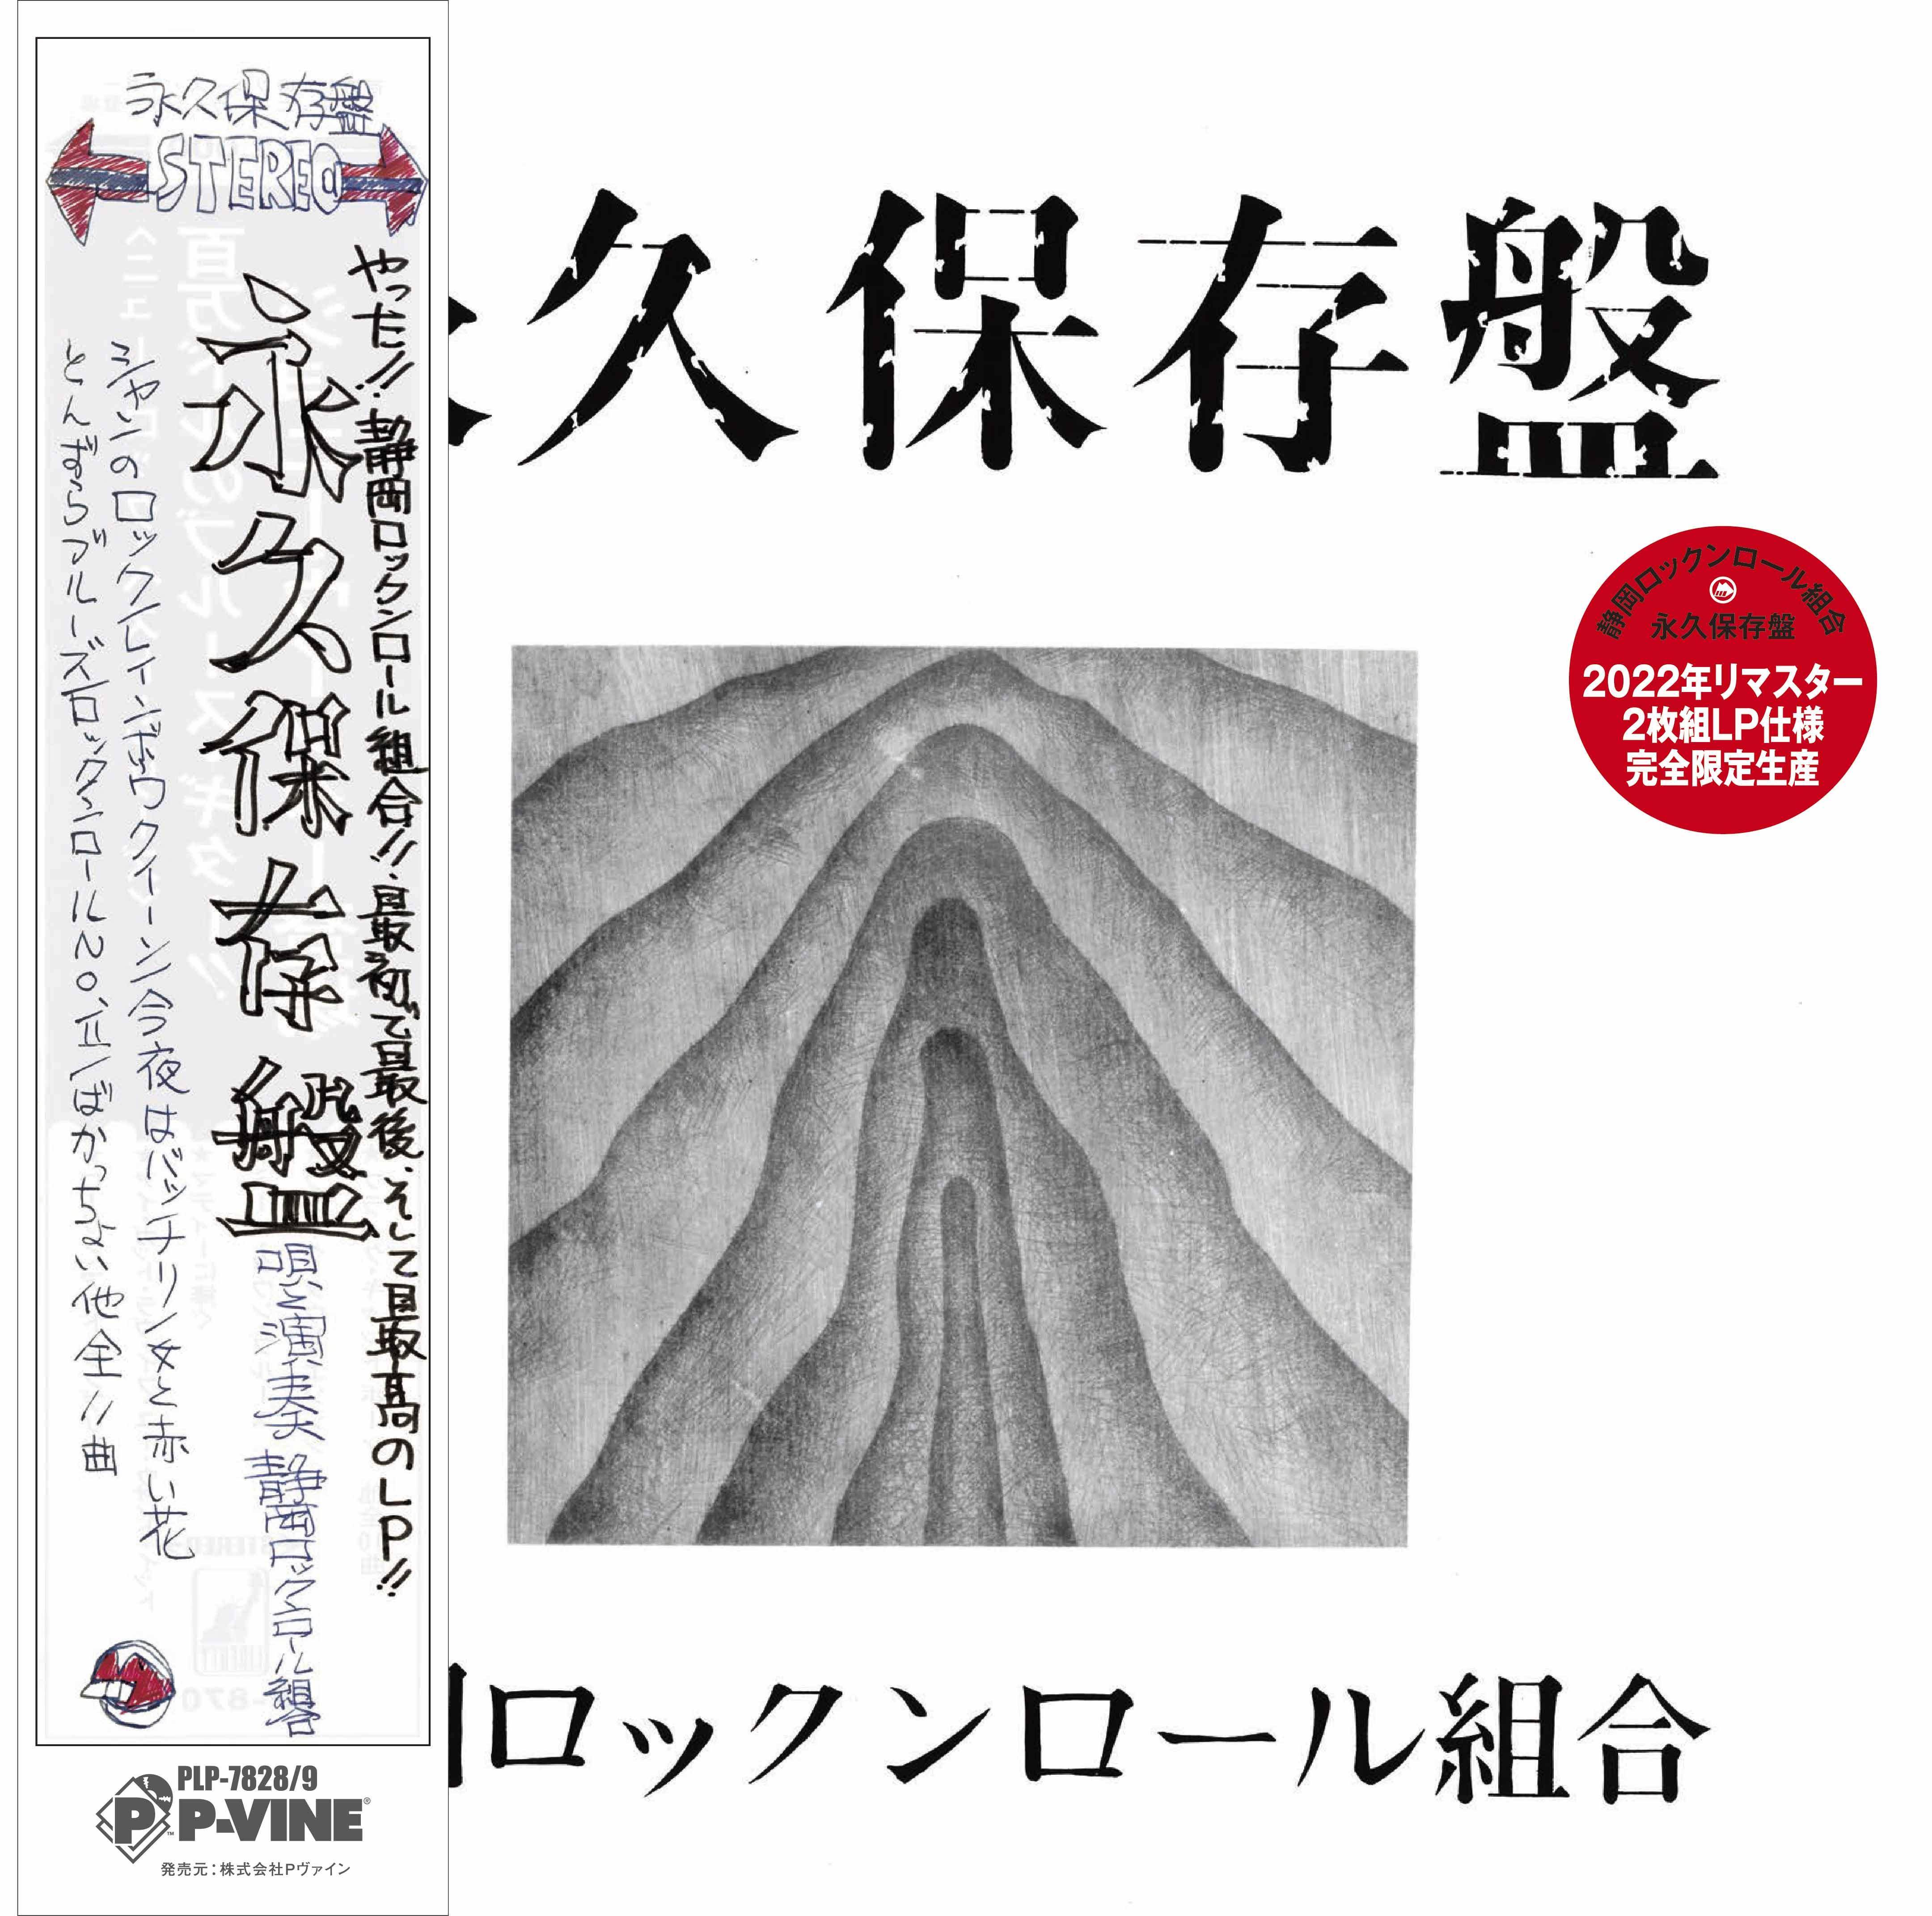 SHIZUOKA ROCK'N ROLL KUMIAI「永久保存盤」